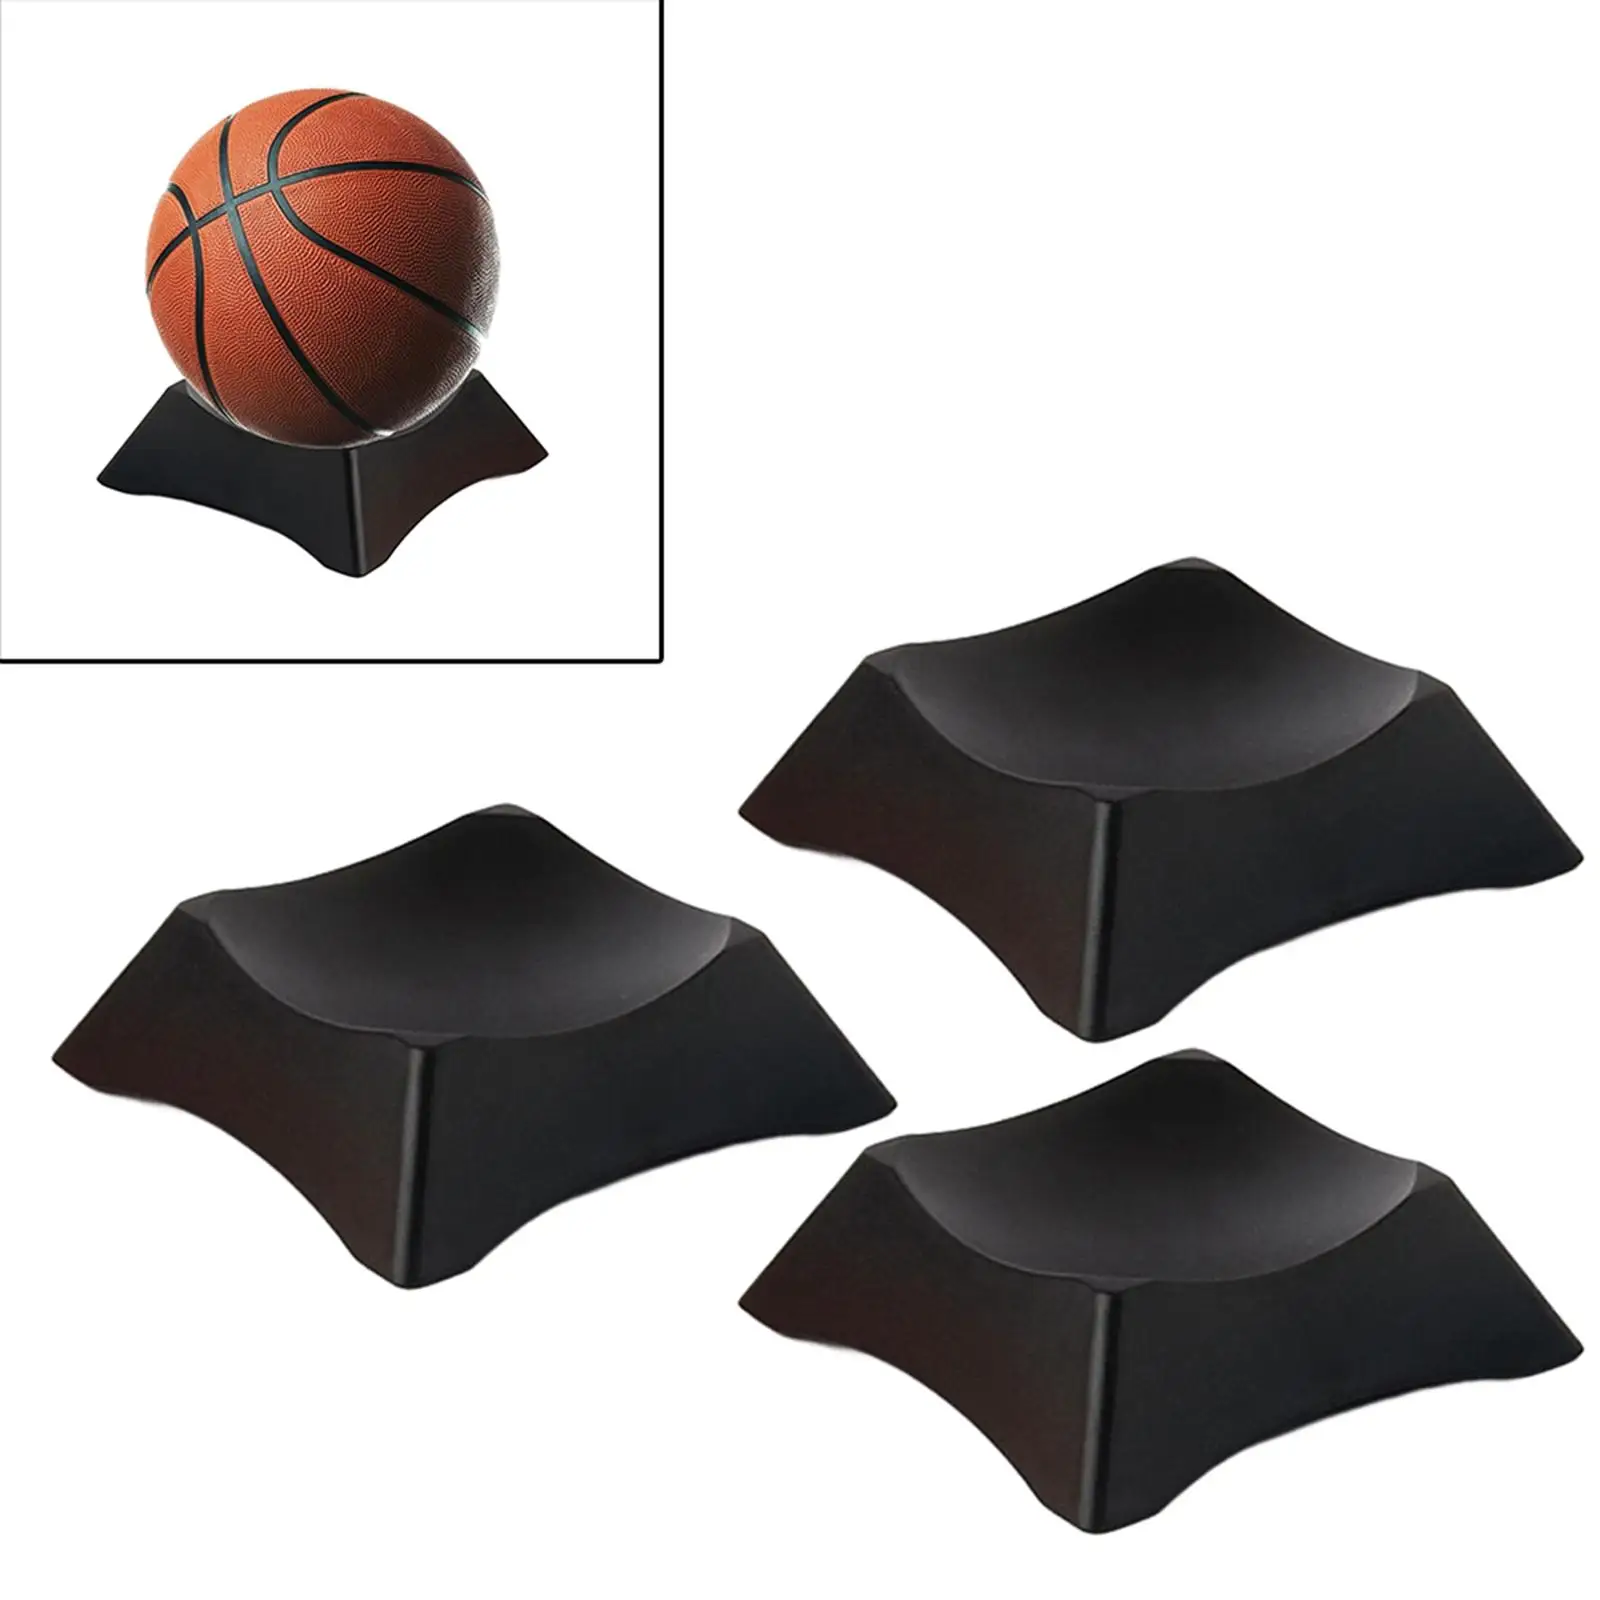 3x Black Ball Display Stand Base Soccer Storage Bracket Organizer Sports Holder for Soccer Desk Basketball Football Volleyball